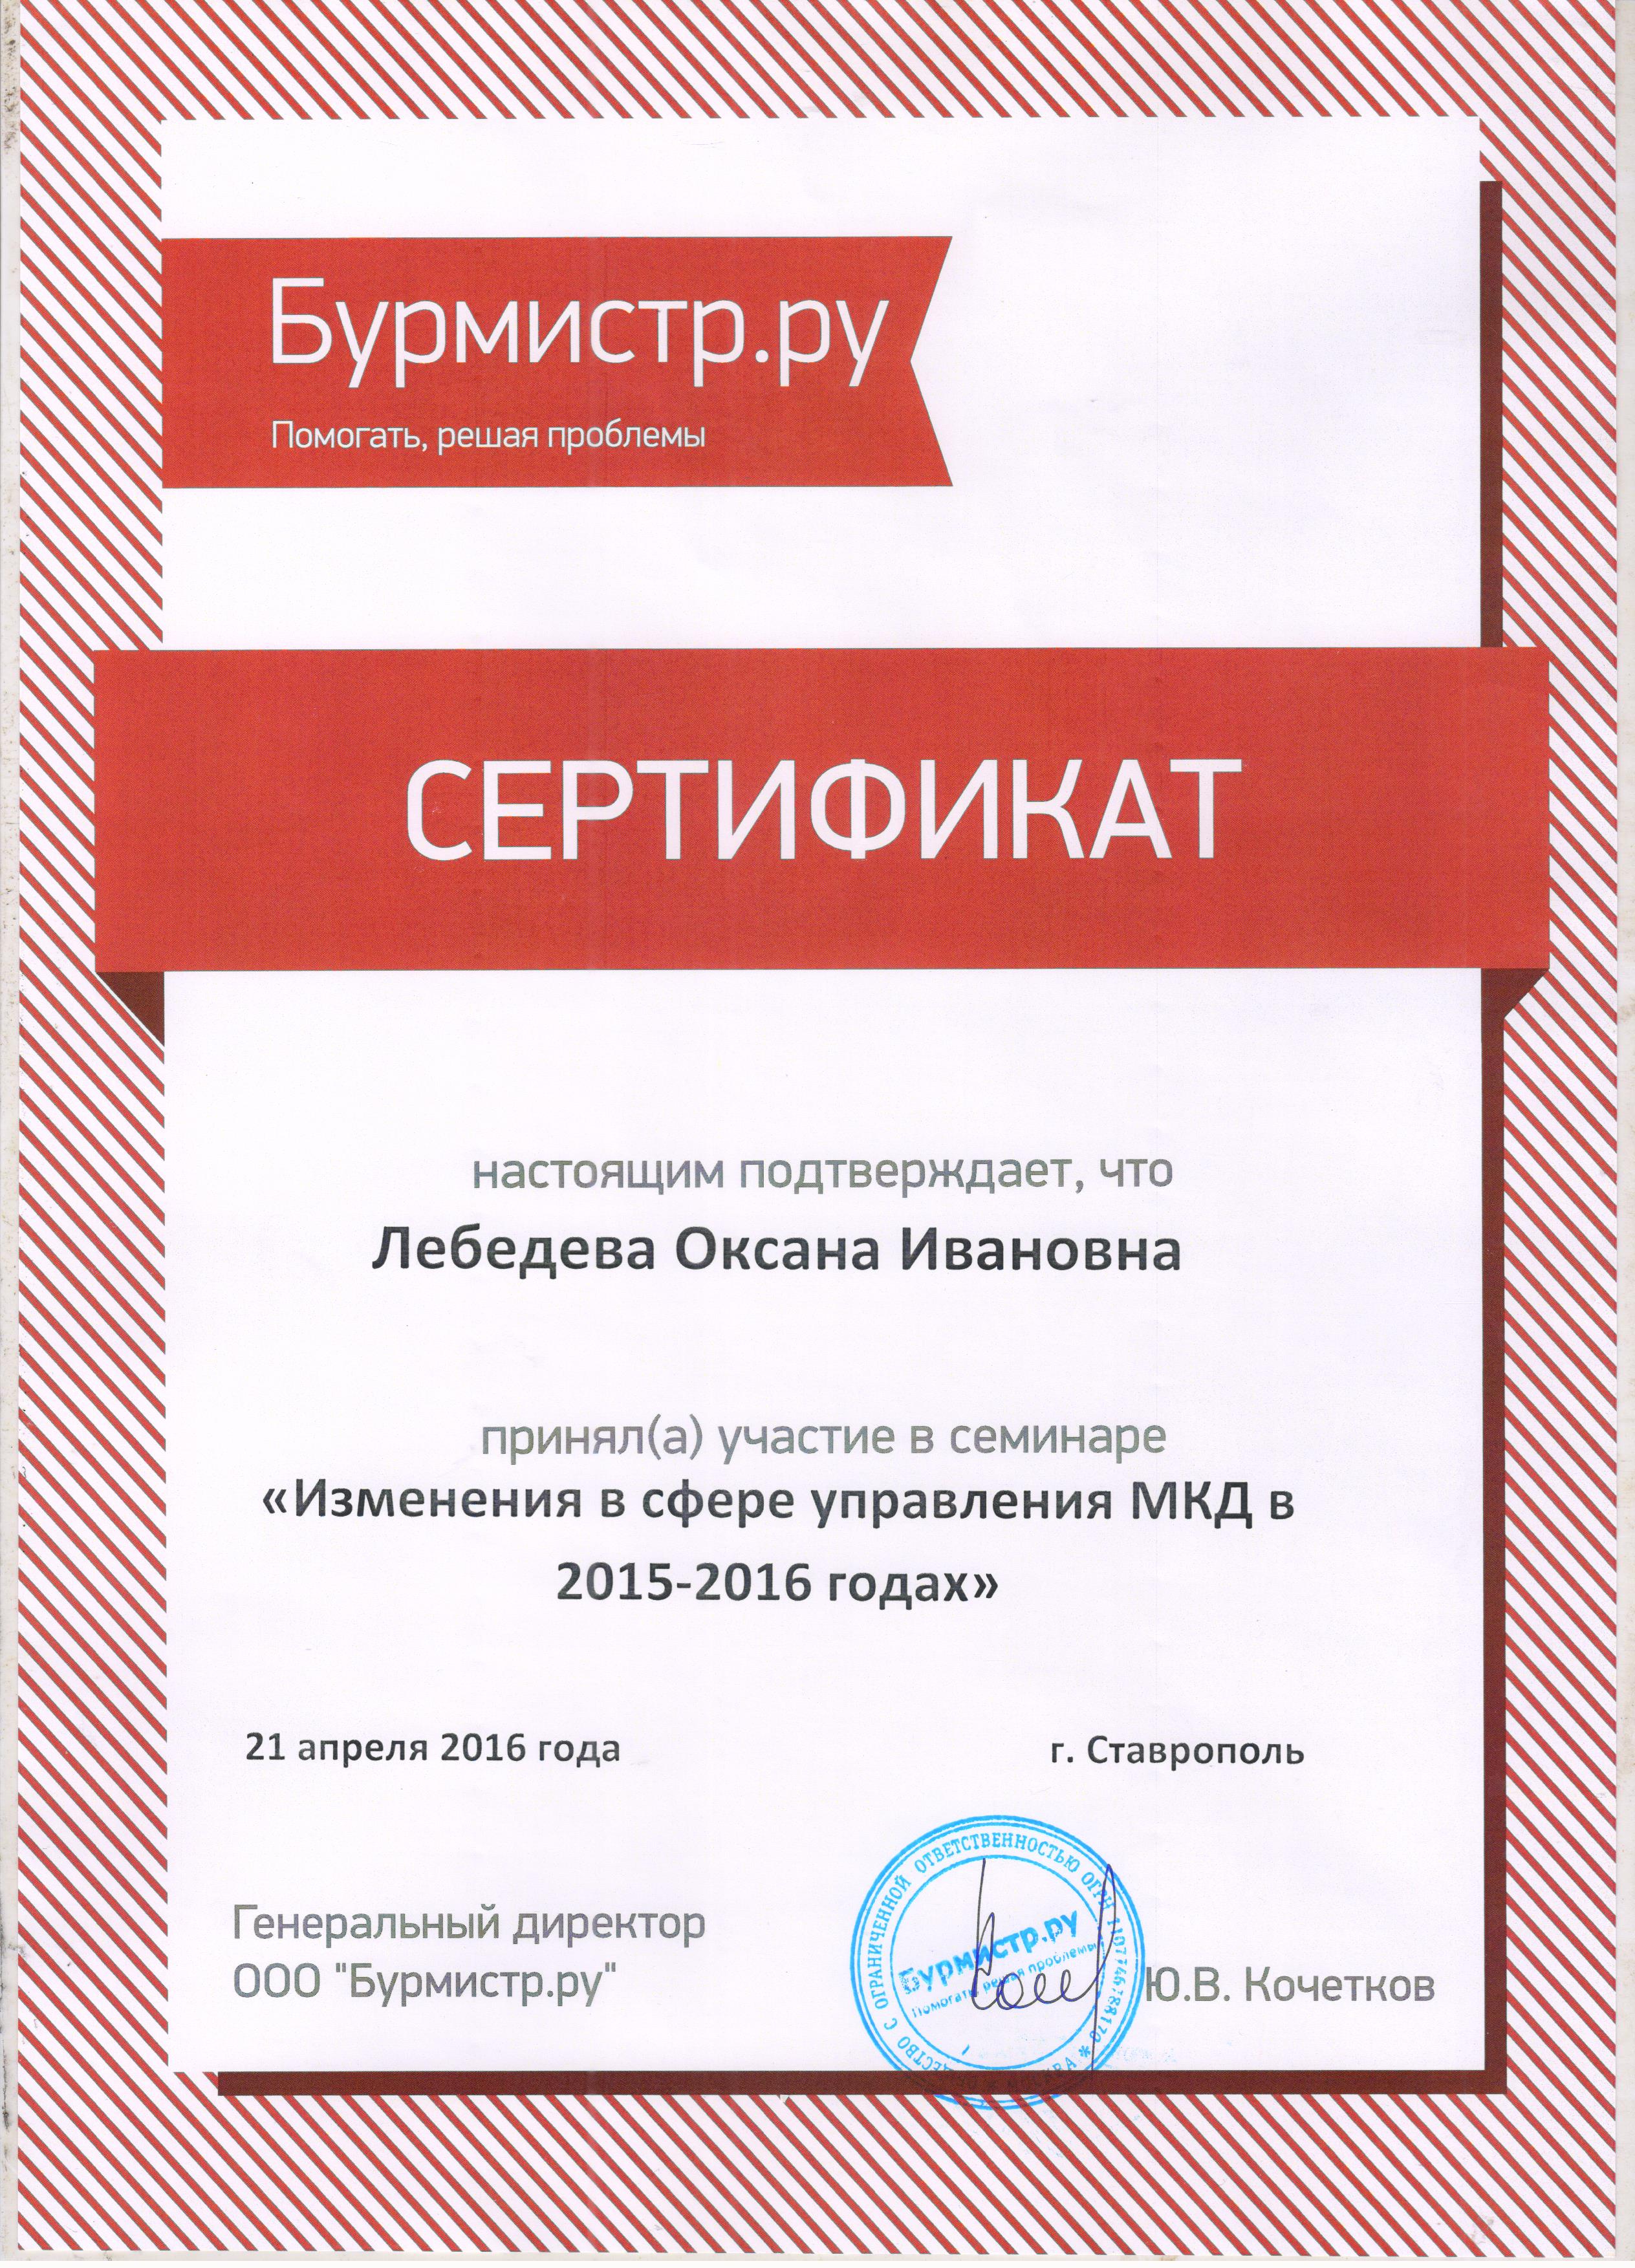 Сертификаты Бурмистр.ру